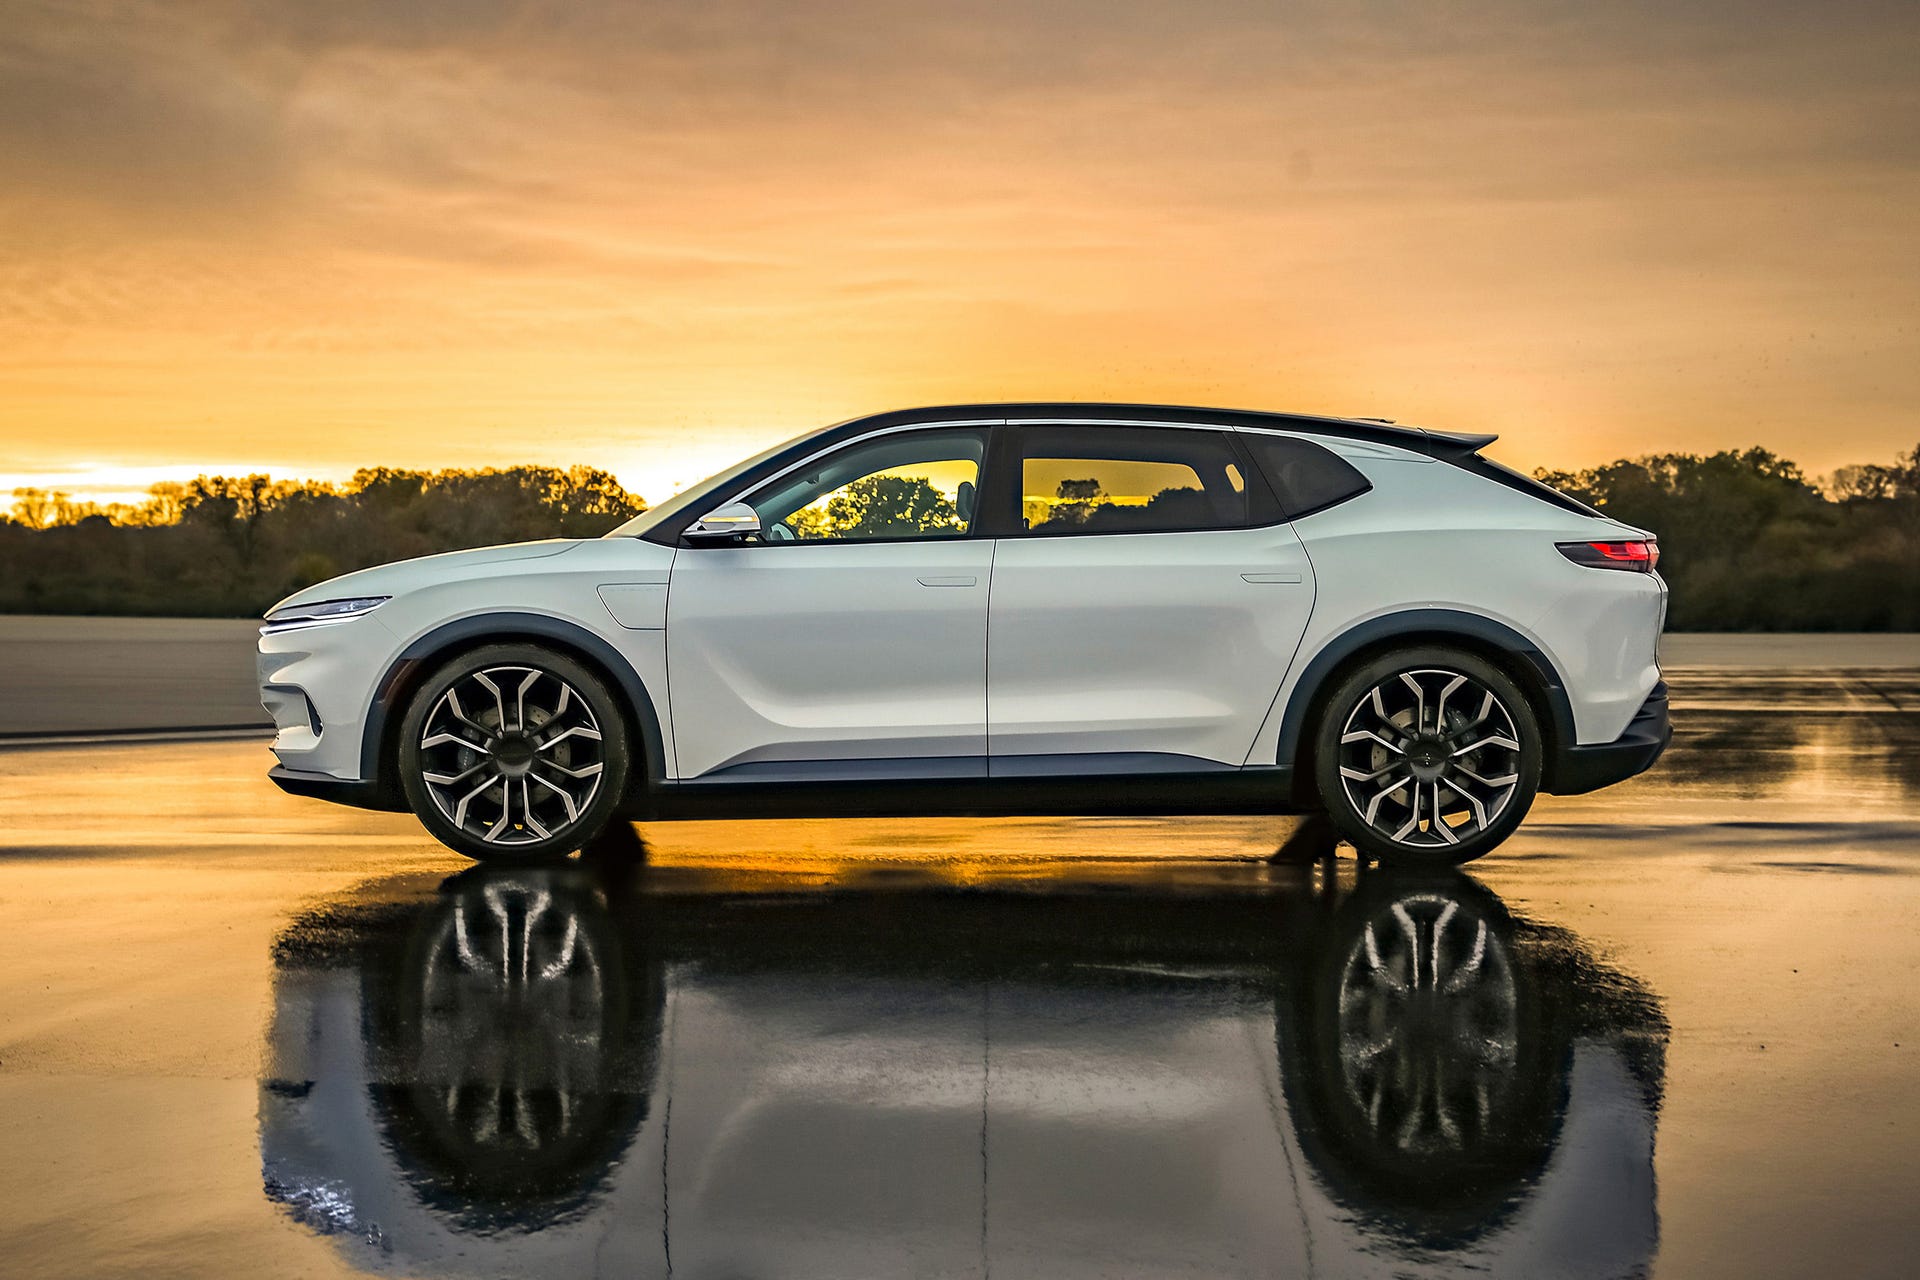 Chrysler Airflow Concept Promo Image - profile